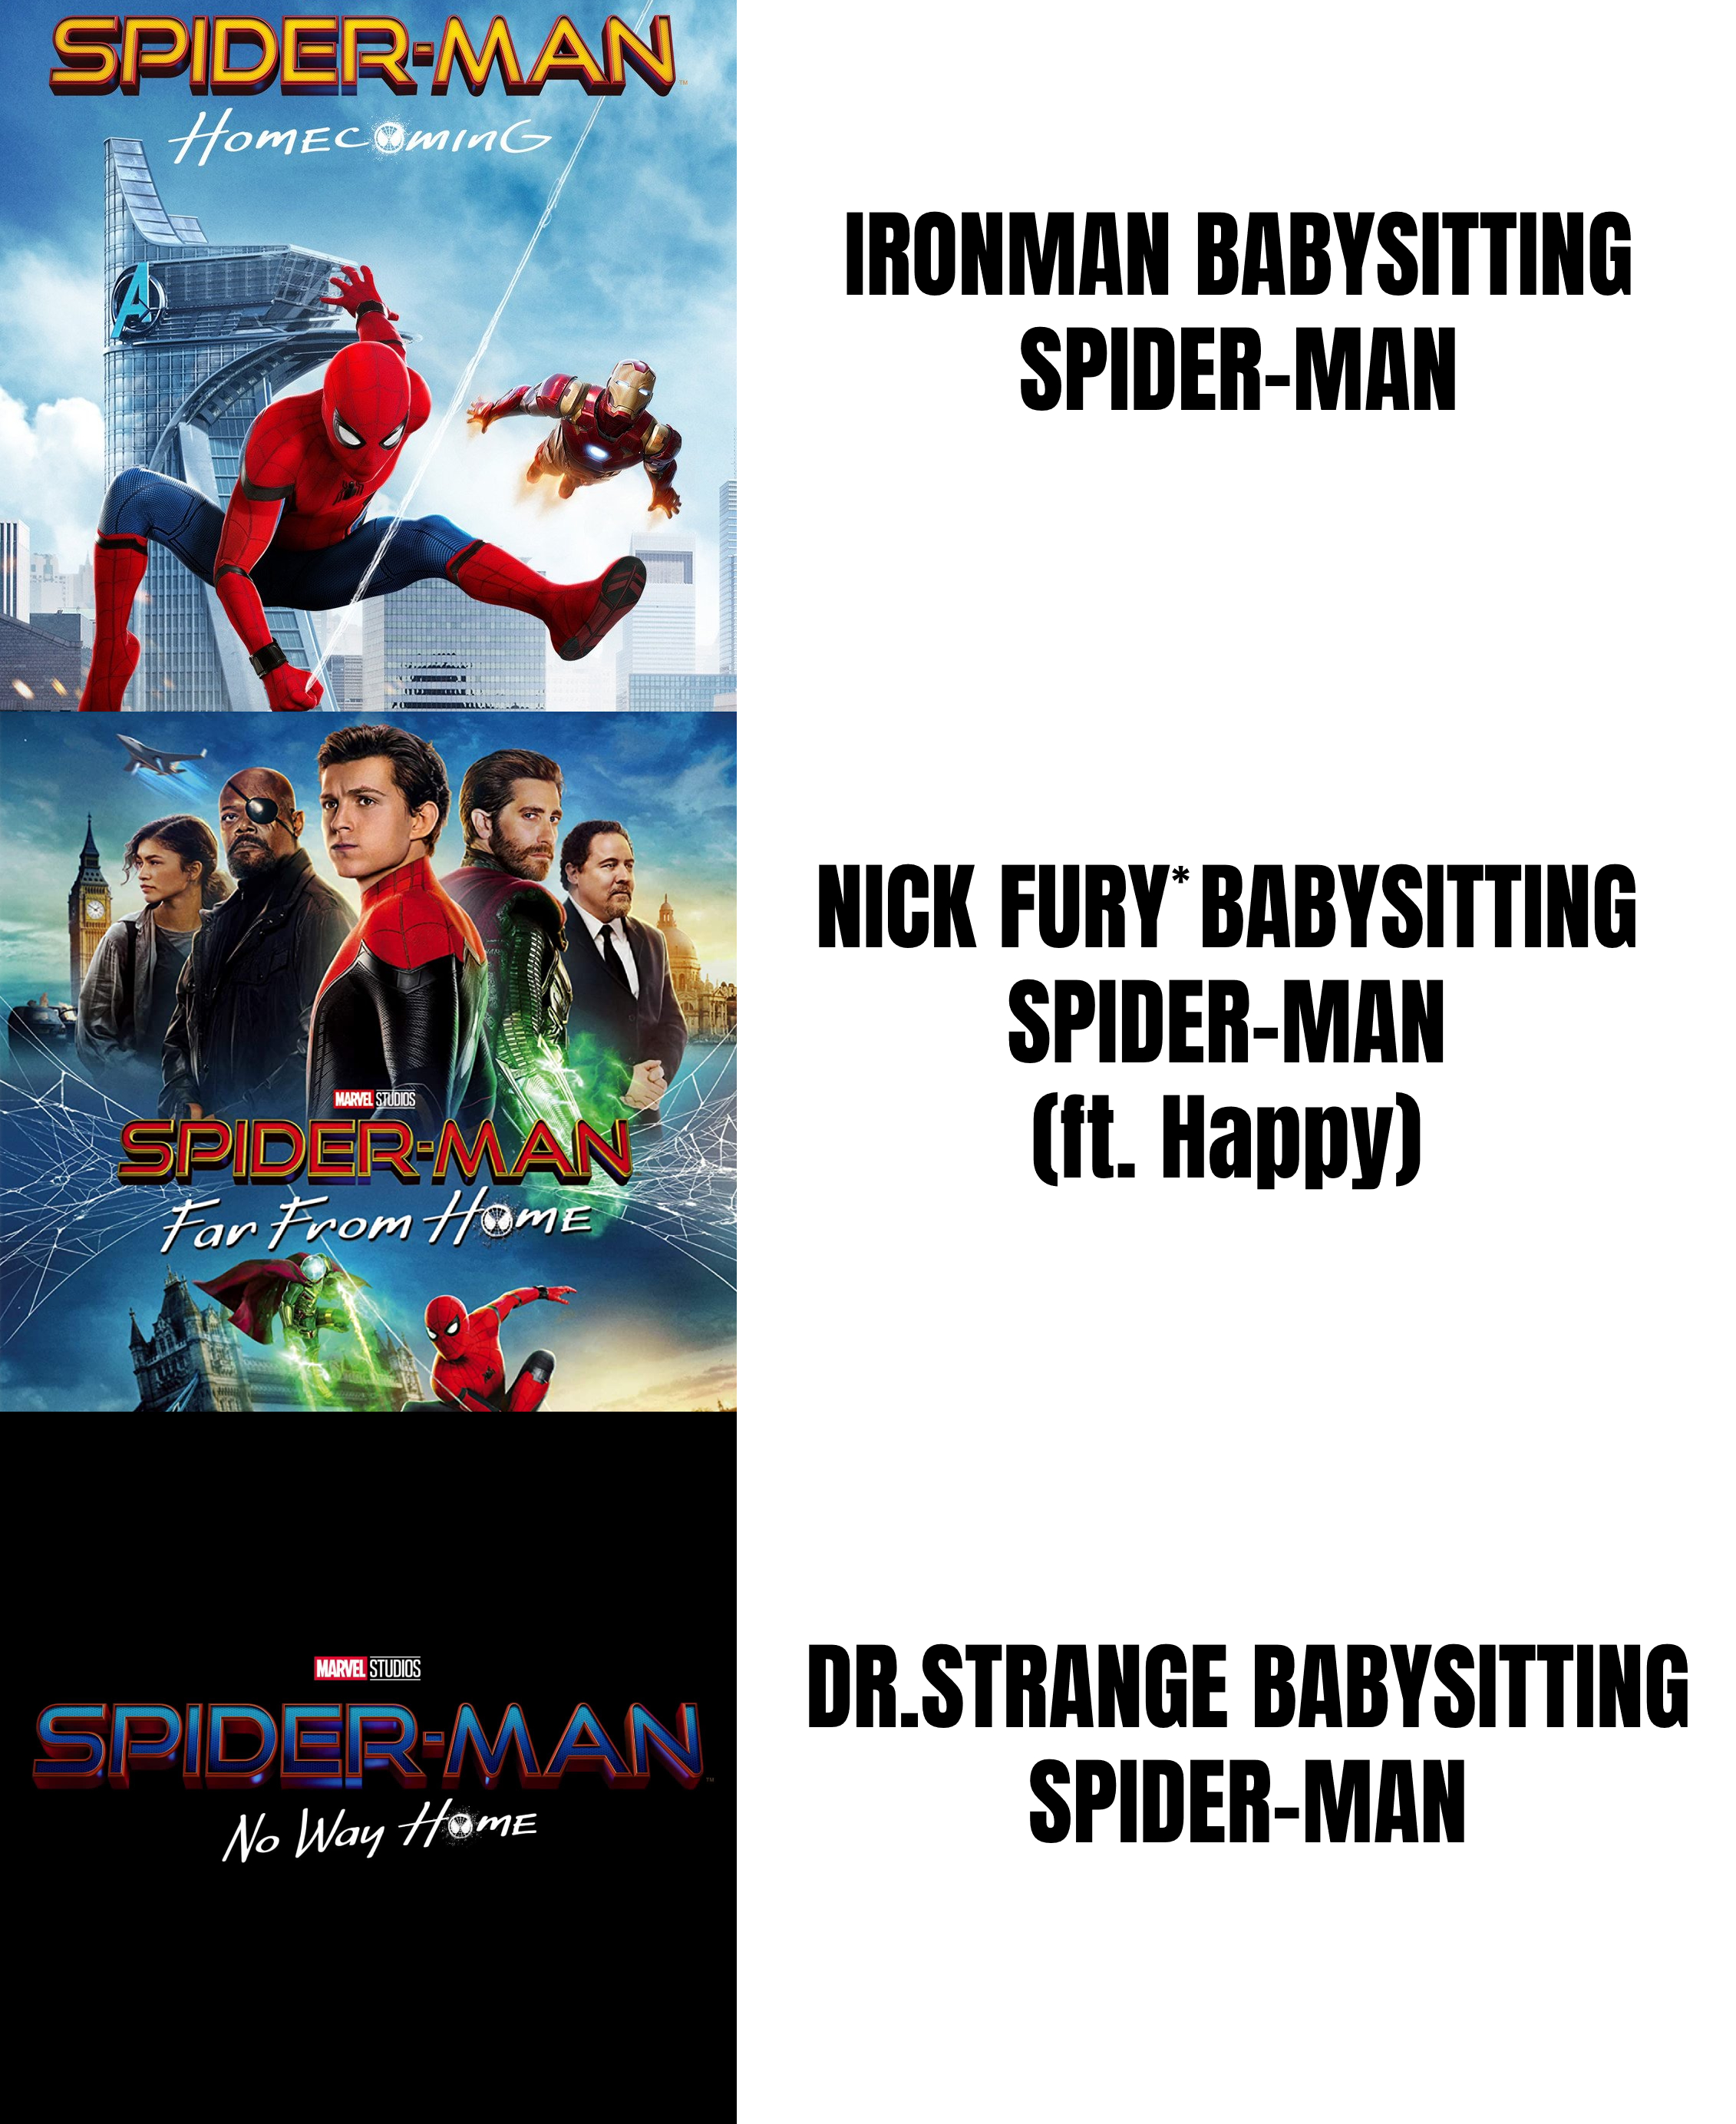 poster - Spider Man Homecoming Ironman Babysitting SpiderMan Nick Fury Babysitting SpiderMan ft. Happy Spiderman far From Home SpiderMan No Way Home Dr.Strange Babysitting SpiderMan